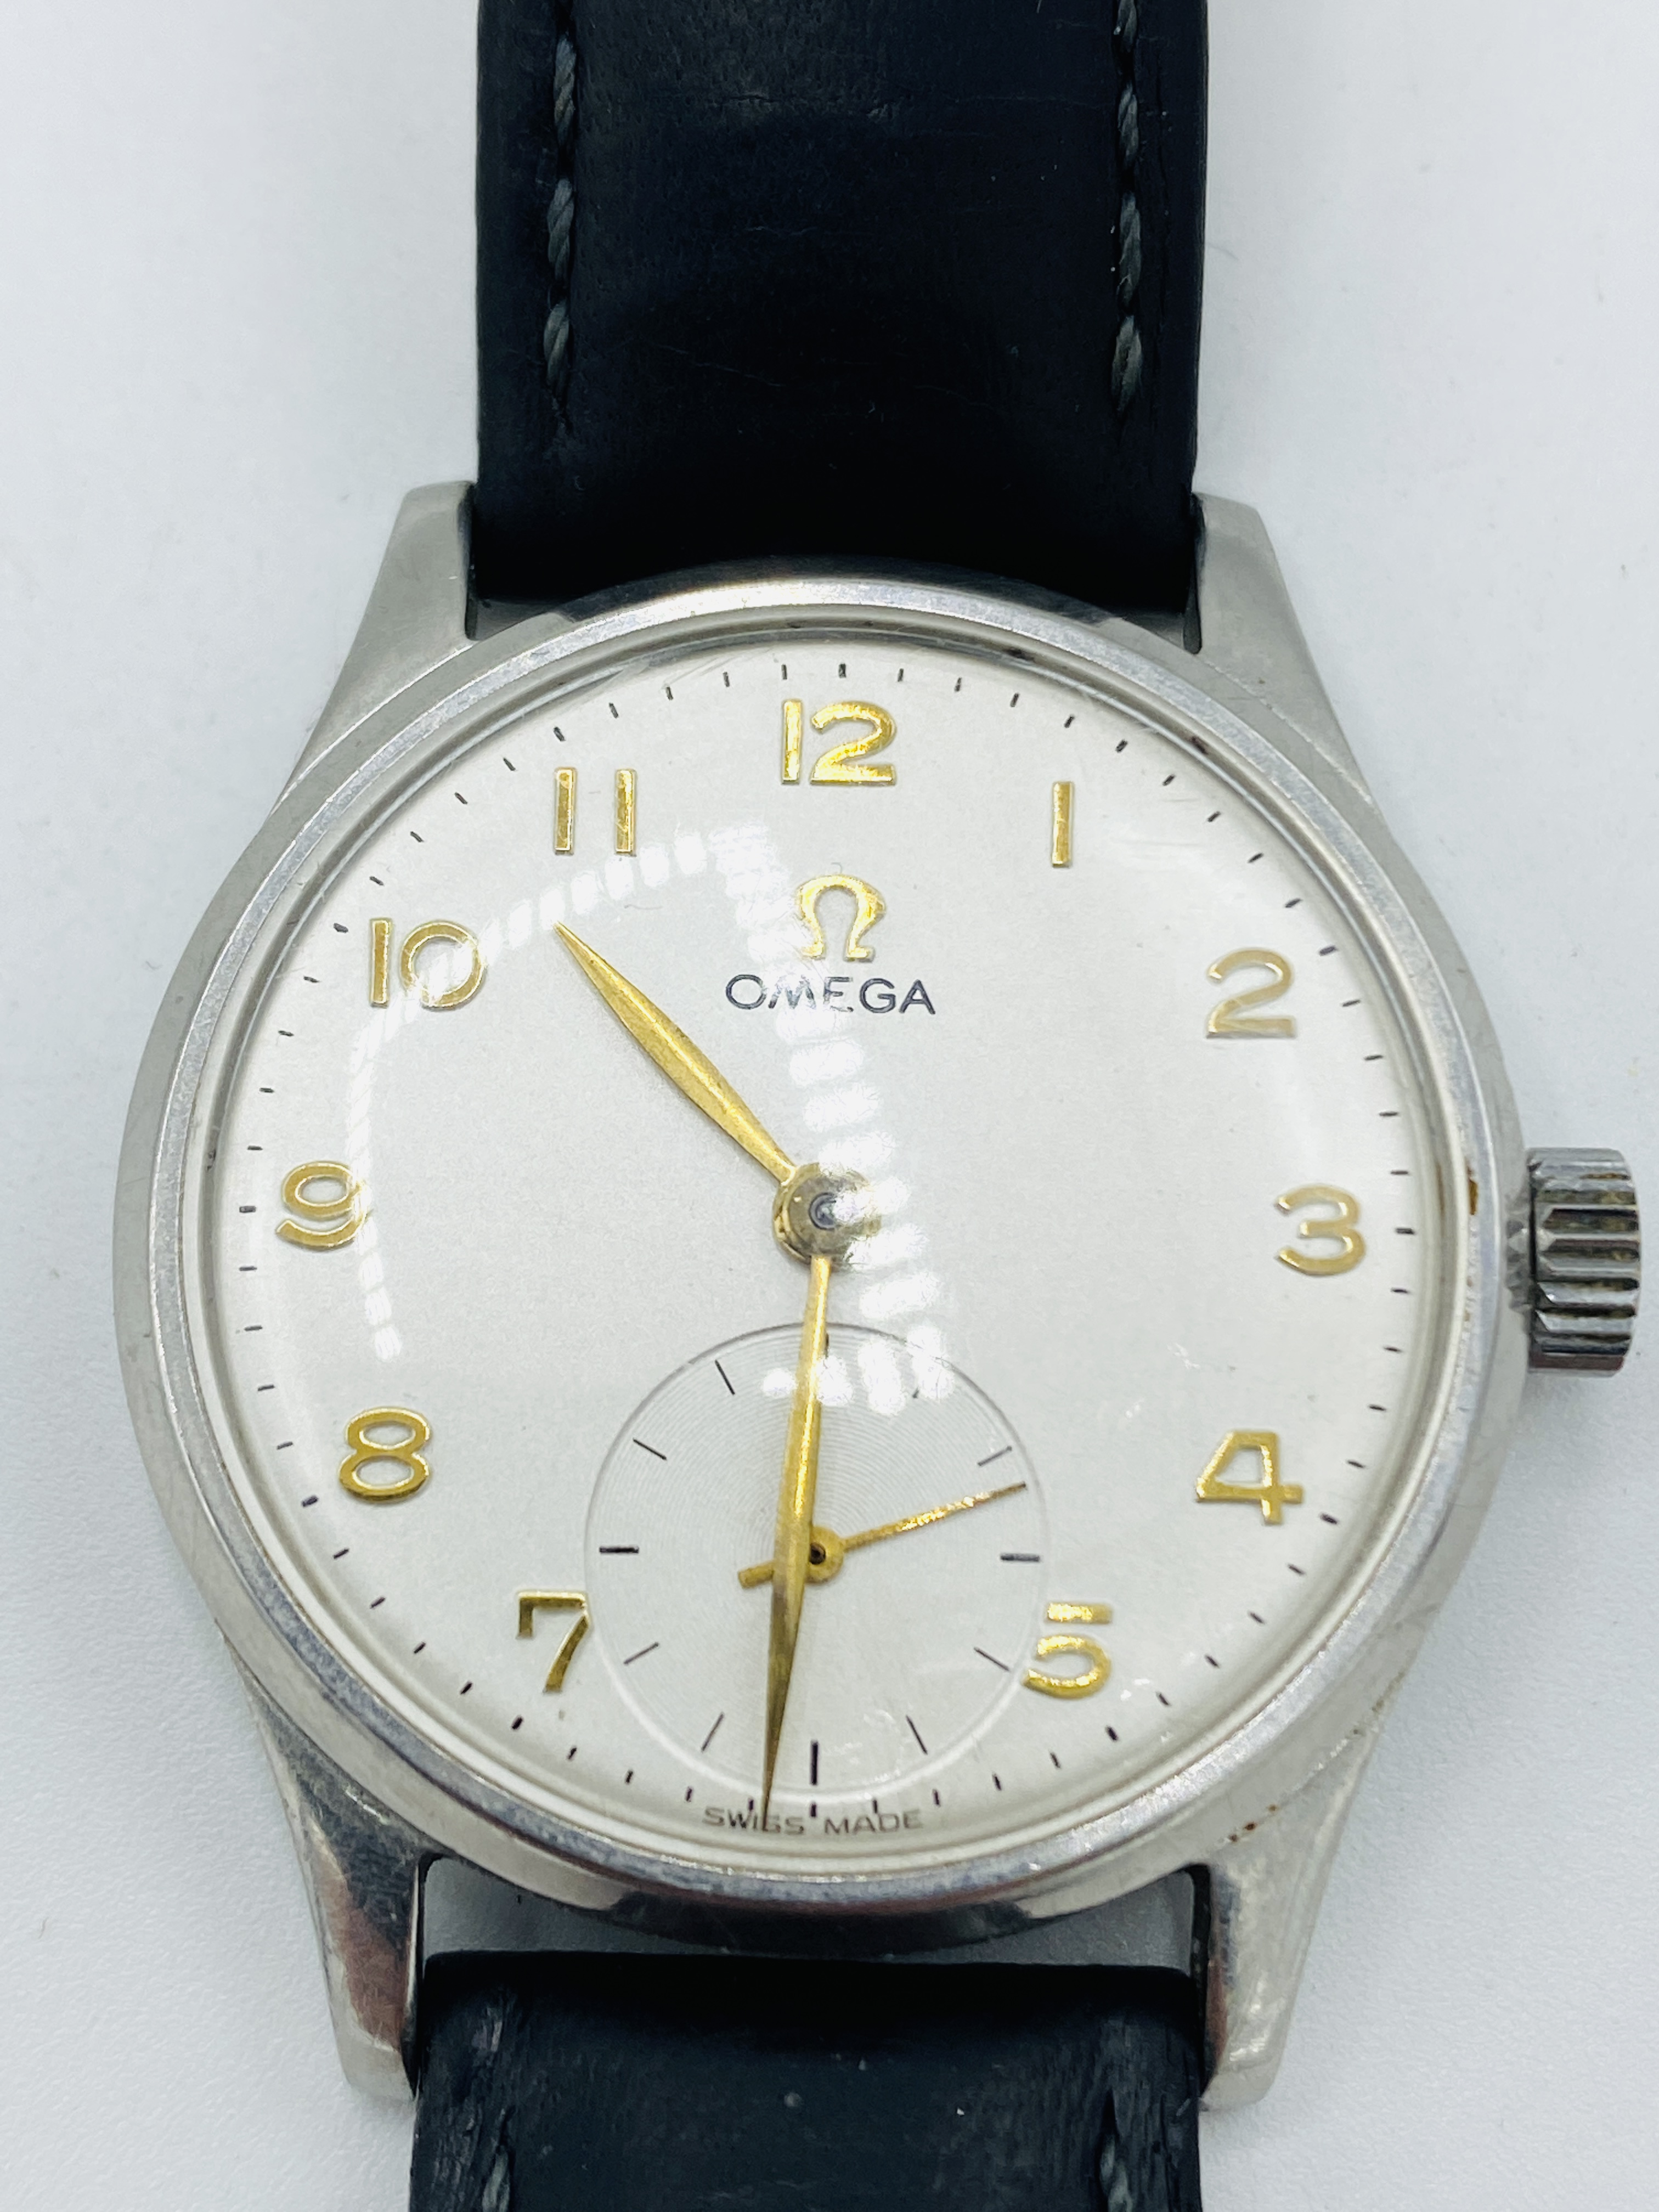 1950 Omega calibre 265 15 jewels wrist watch, going